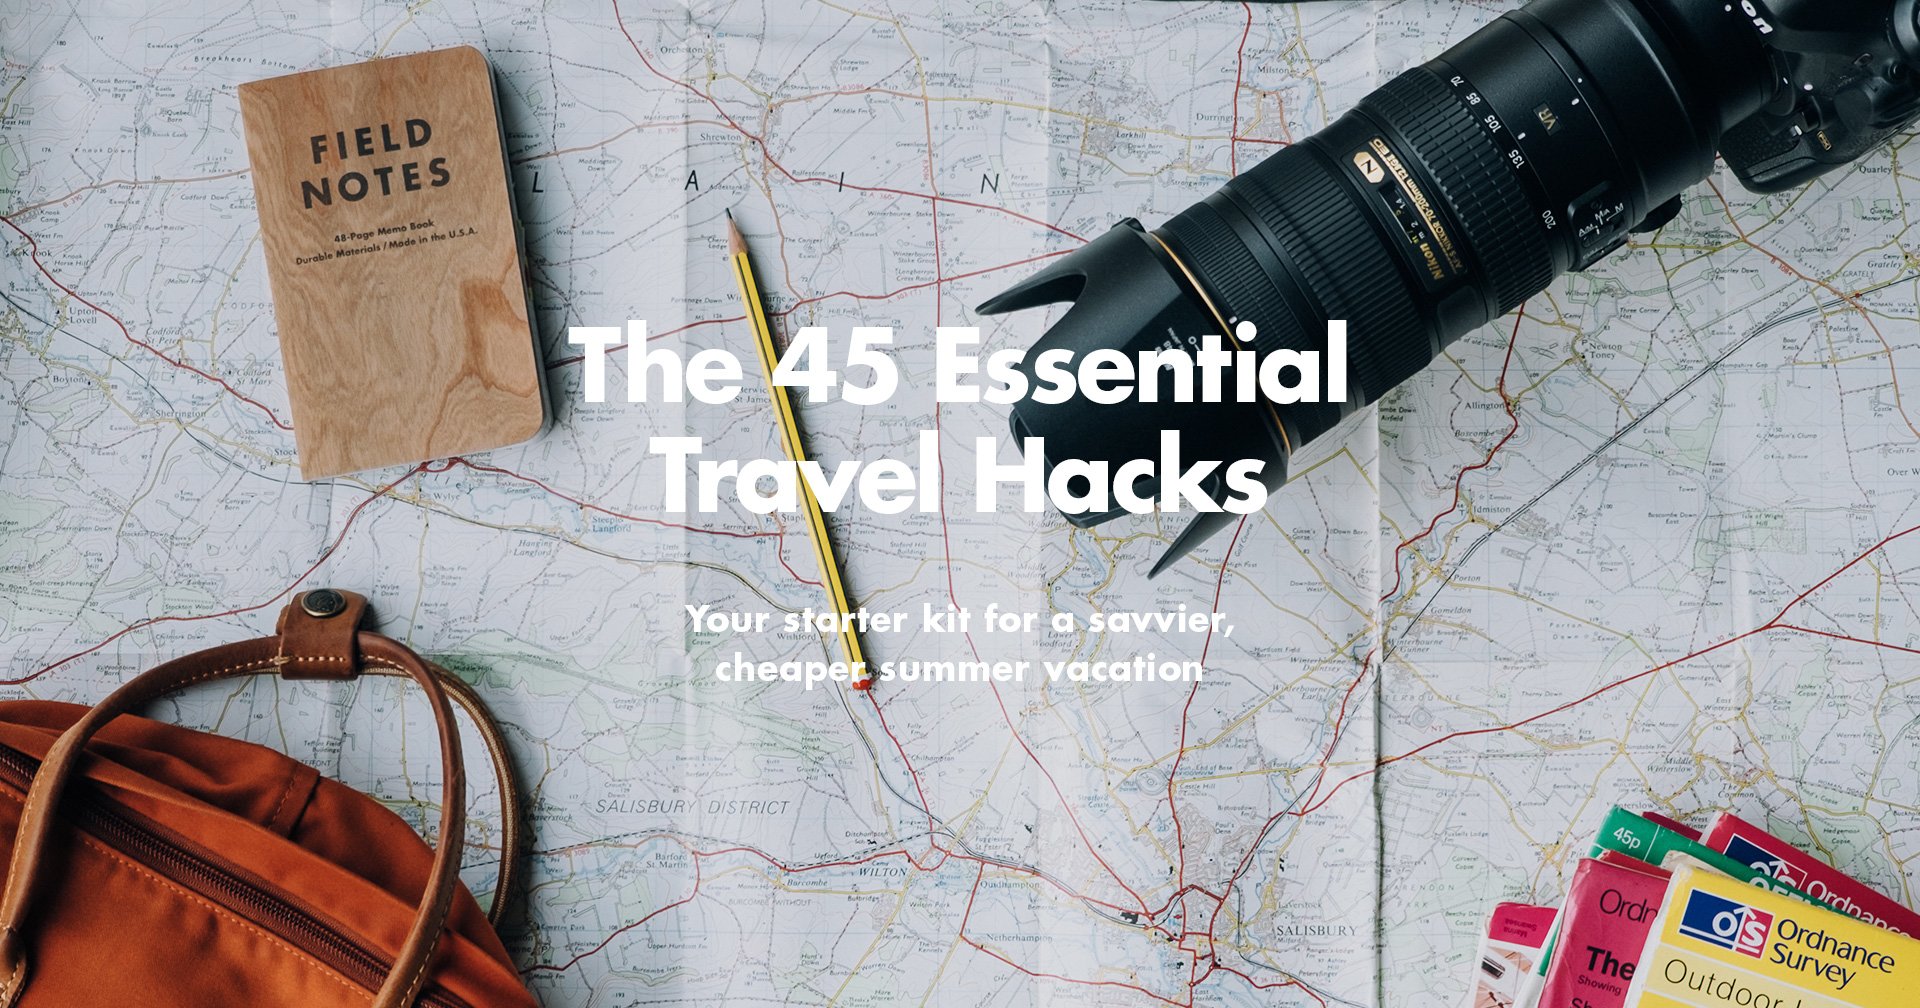 The 45 Essential Travel Hacks